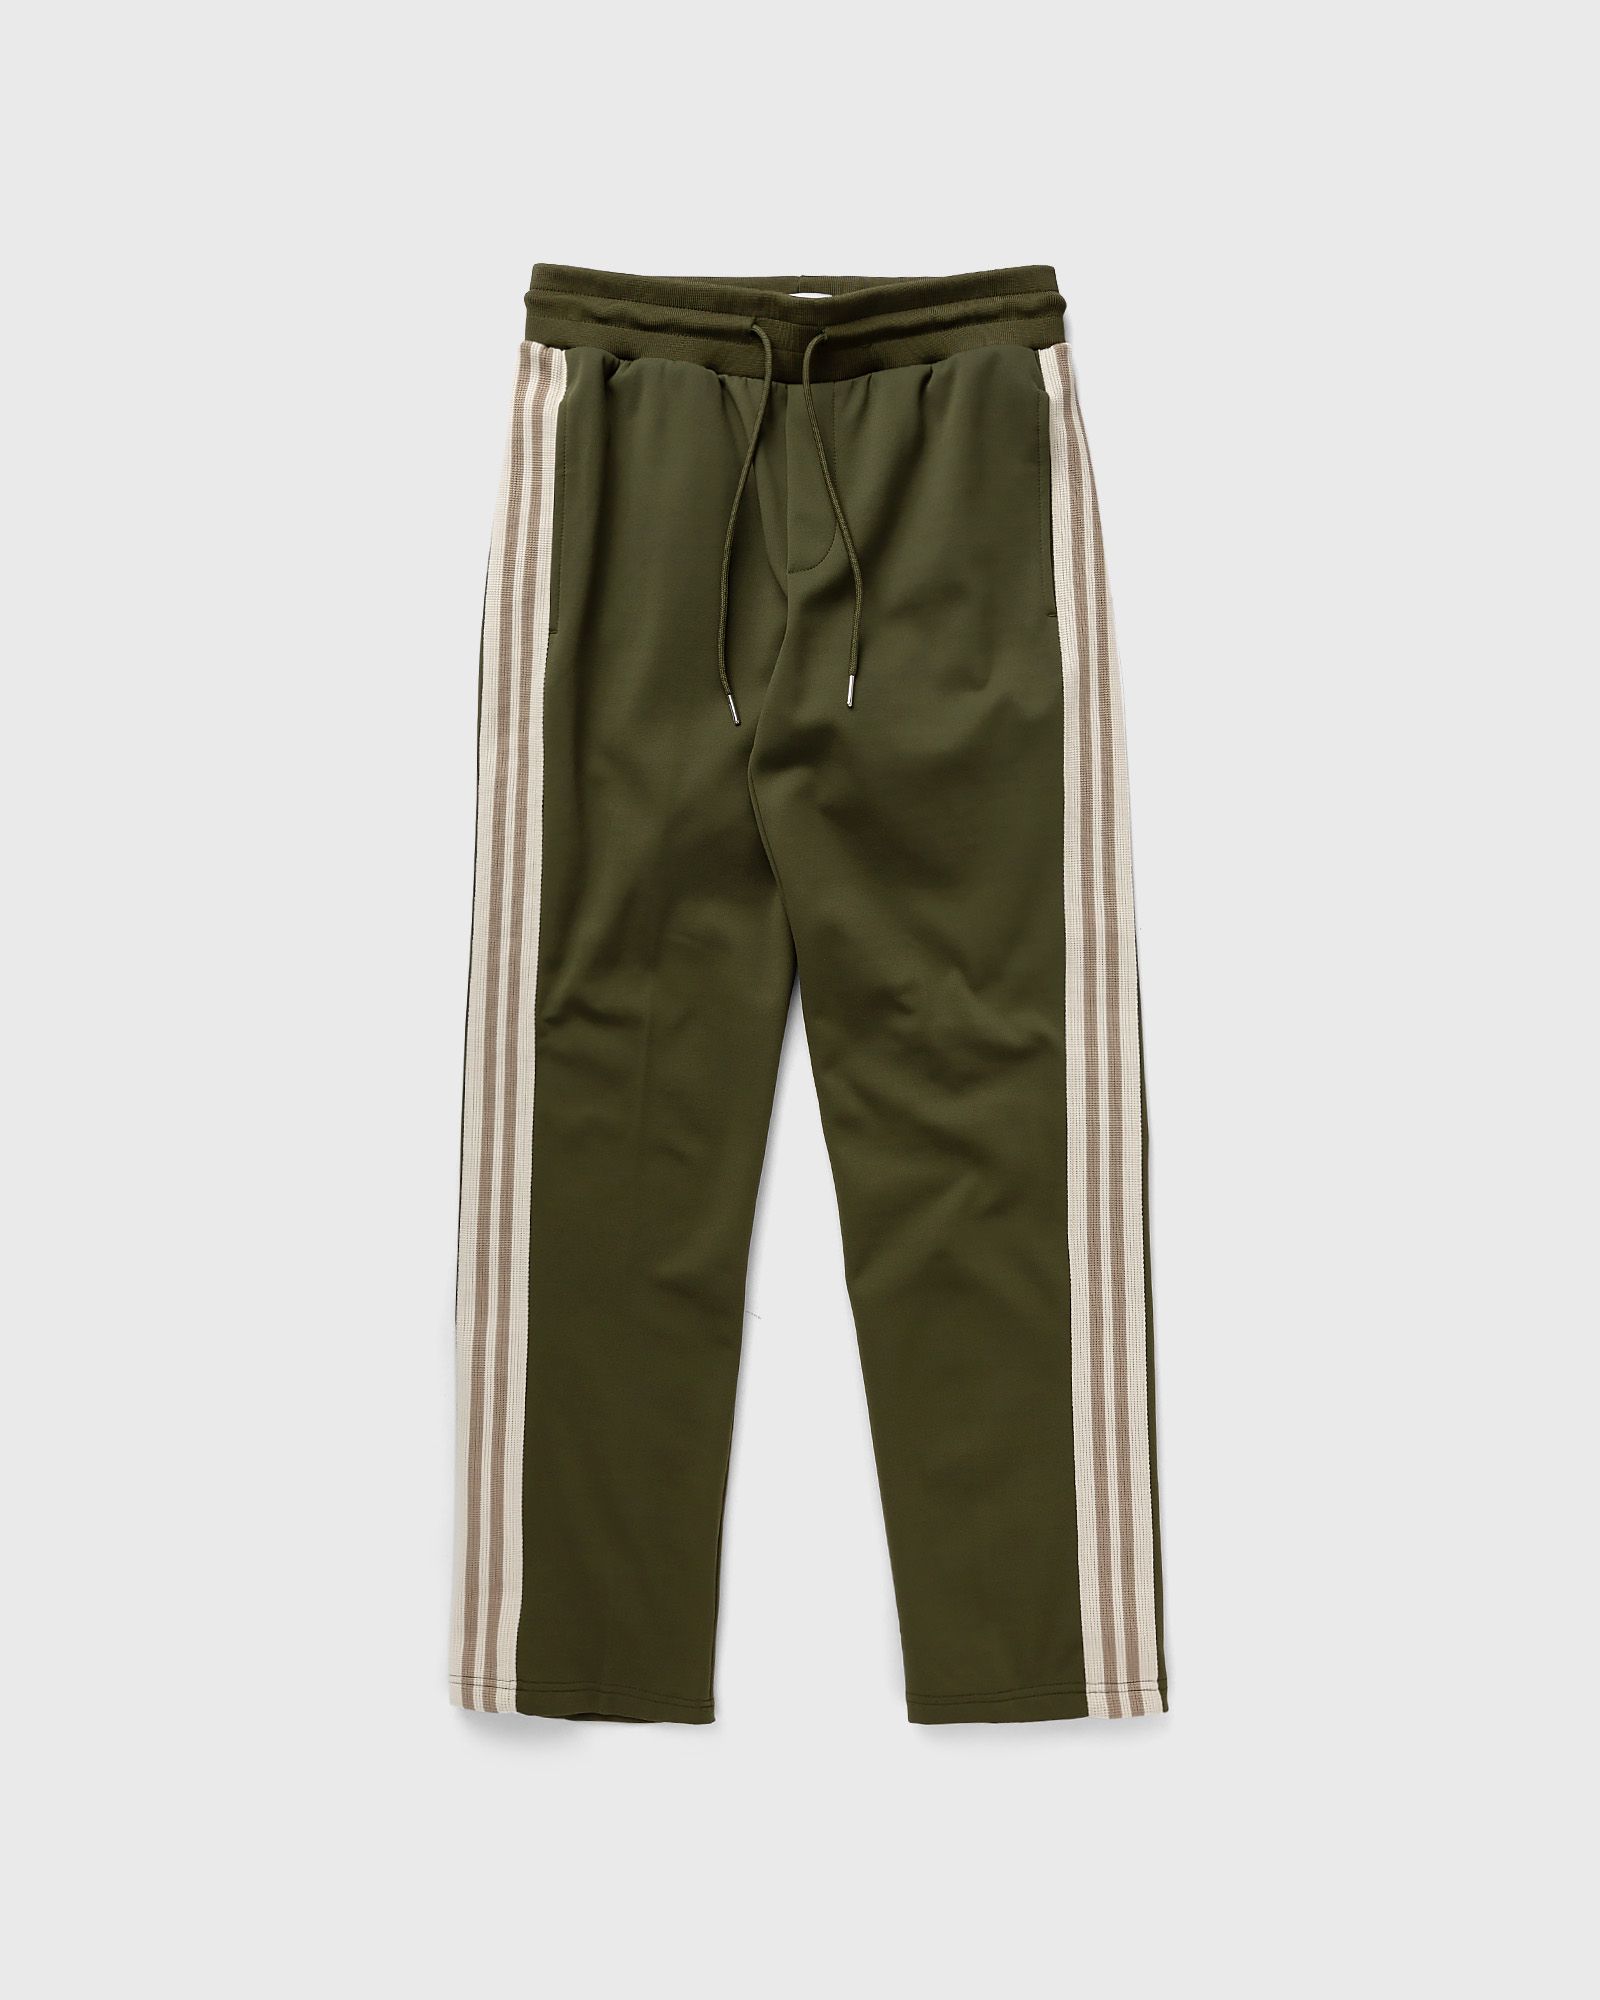 Les Deux - sterling track pants men casual pants|track pants green|beige in größe:l